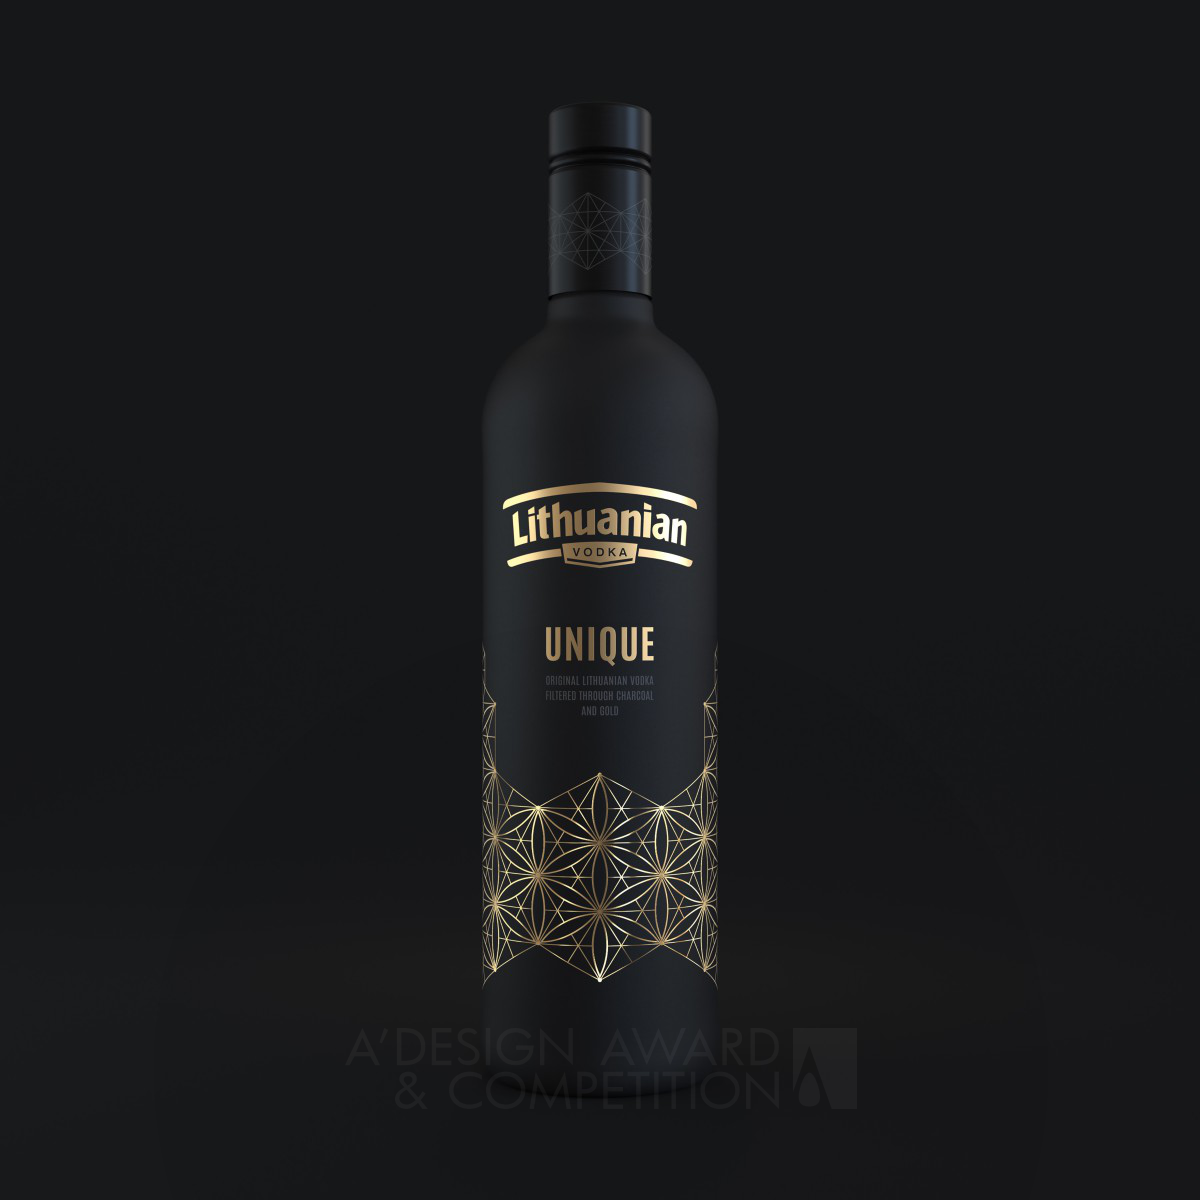 Lithuanian Vodka Unique Packaging Design by Edvardas Kavarskas